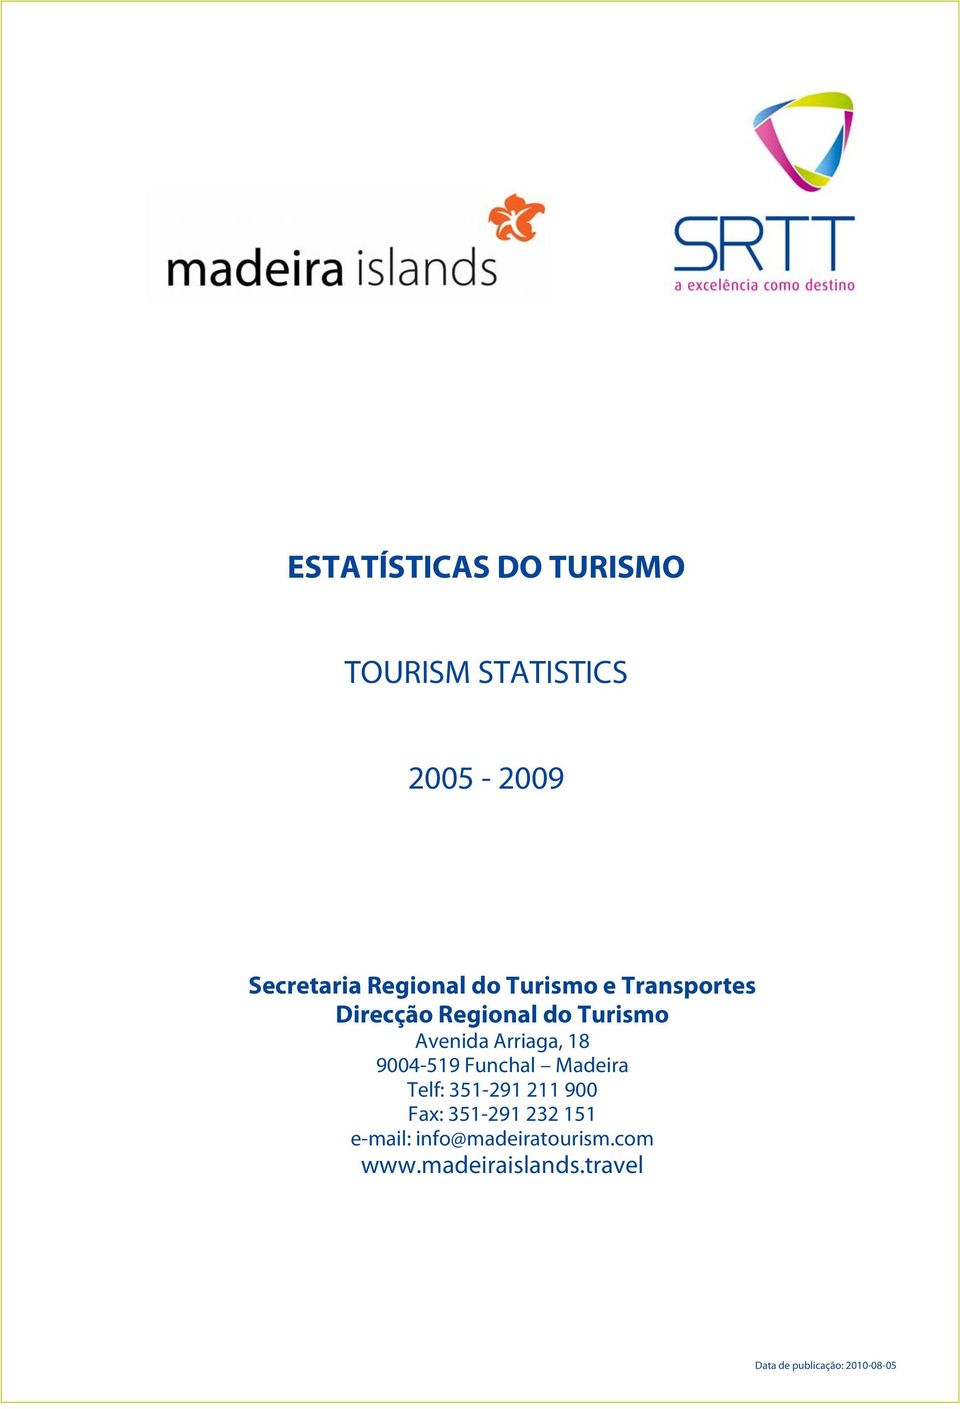 Funchal Madeira Telf: 351-291 211 900 Fax: 351-291 232 151 e-mail: